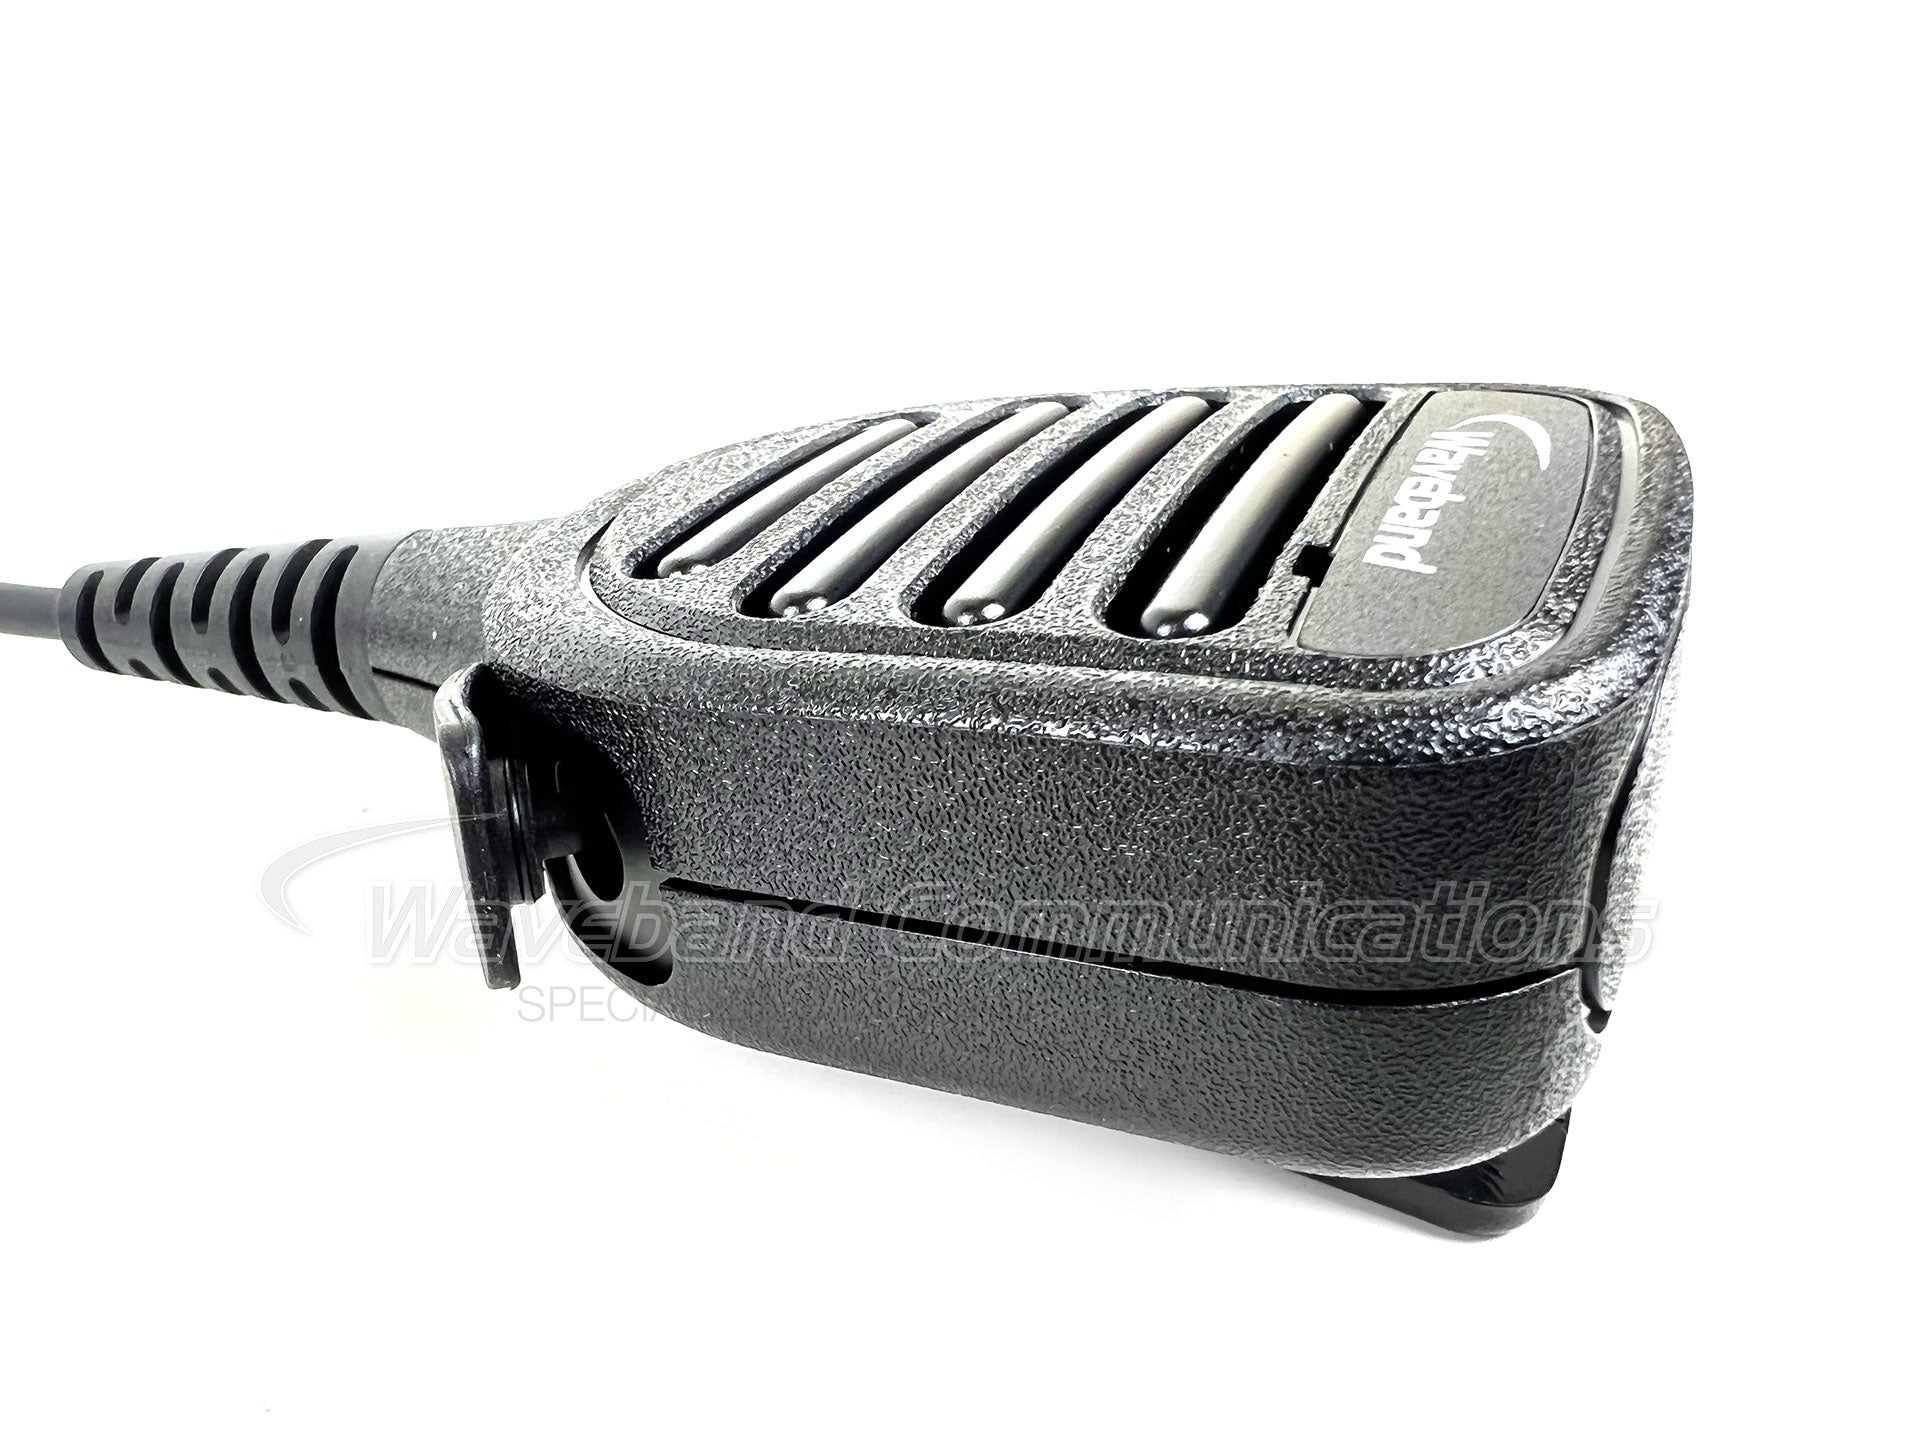 PMMN4025 Fernsprecher Mikrofon für Motorola XPR TRBO Radios. WB# WX-8010-M-P08